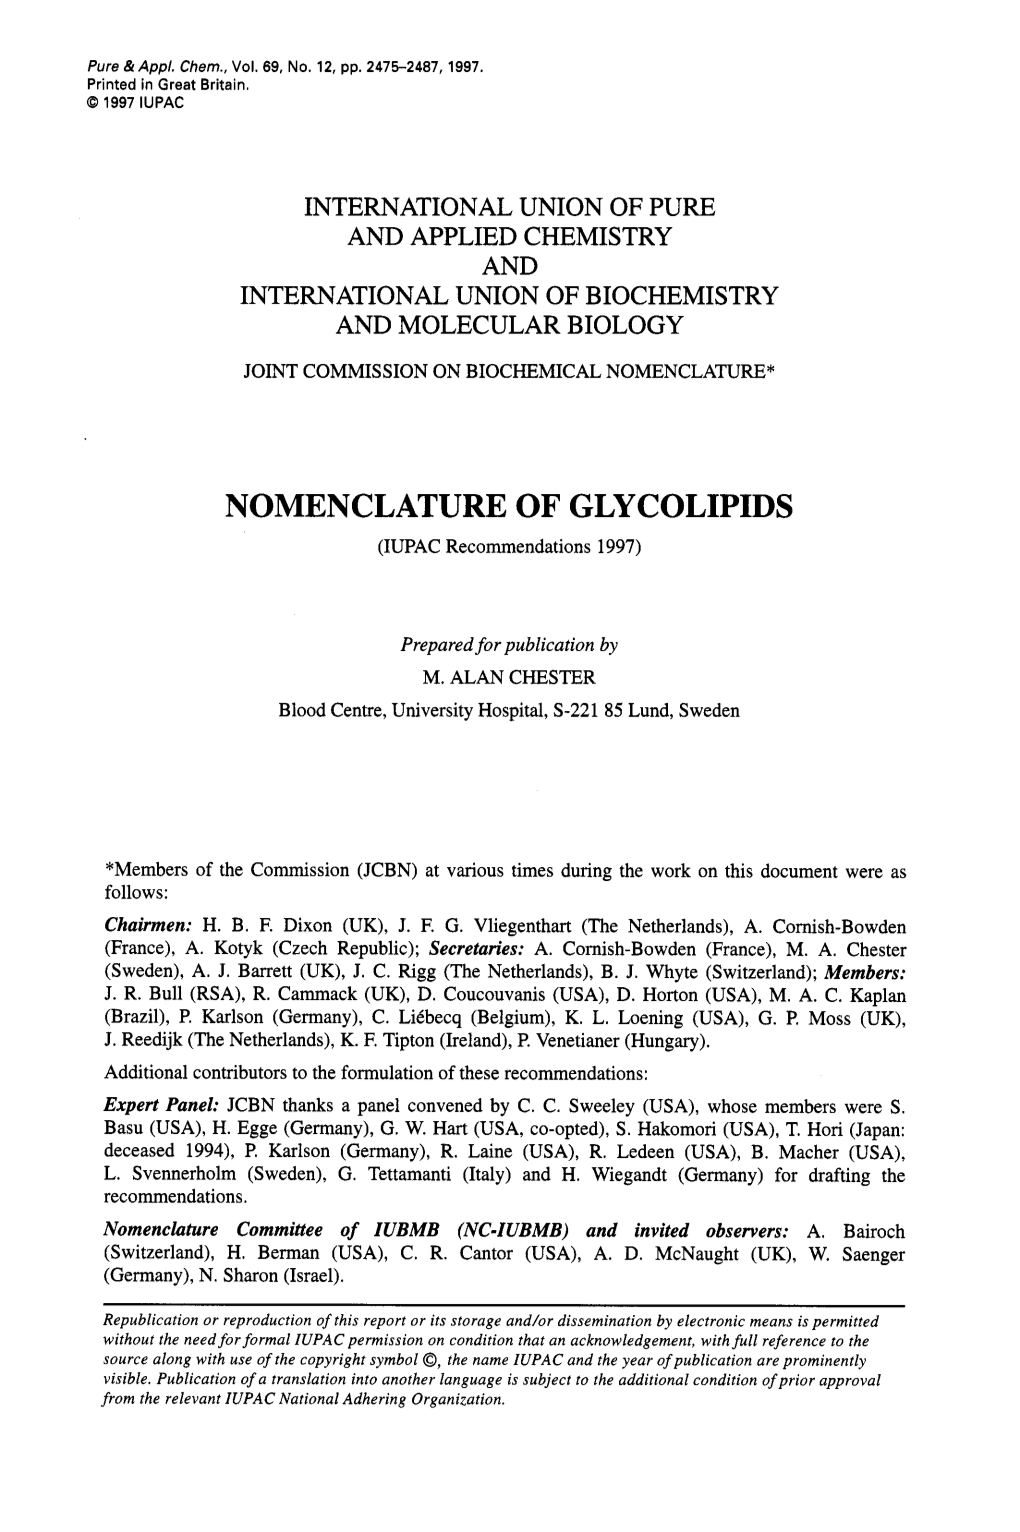 NOMENCLATURE of GLYCOLIPIDS (IUPAC Recommendations 1997)